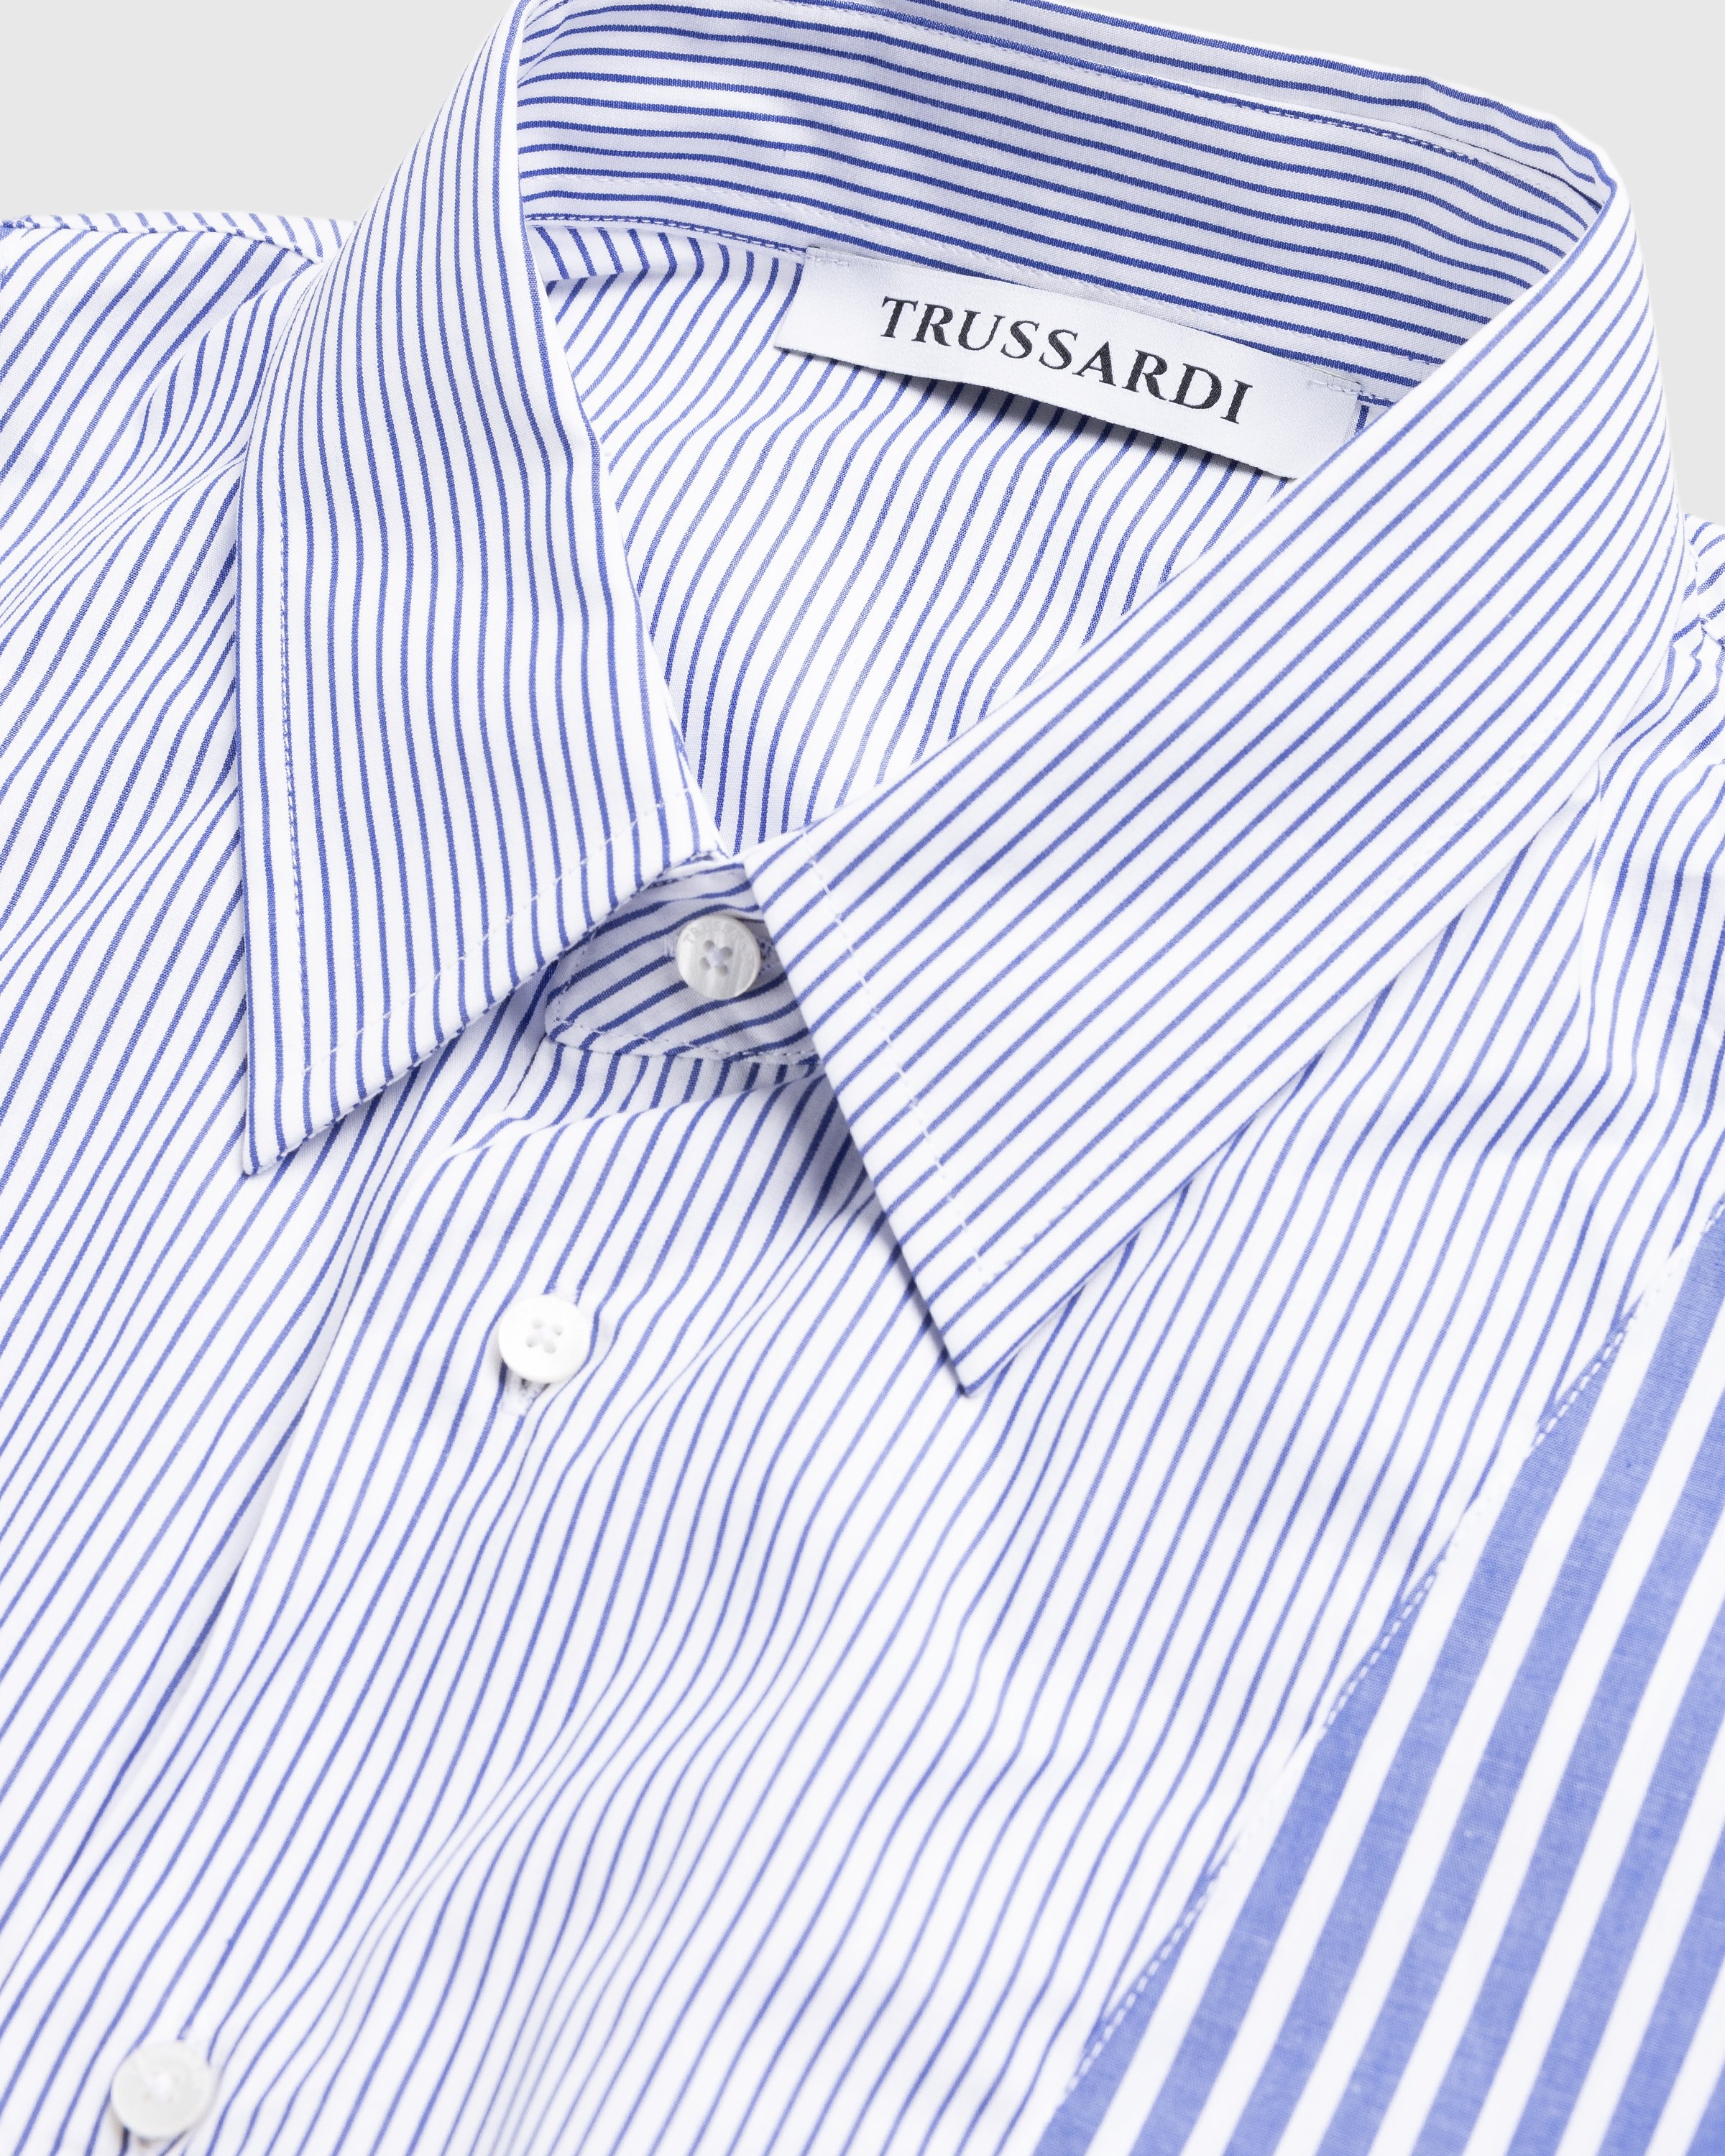 Trussardi - Shirt Cotton Mix Stripes - Clothing - Blue - Image 5